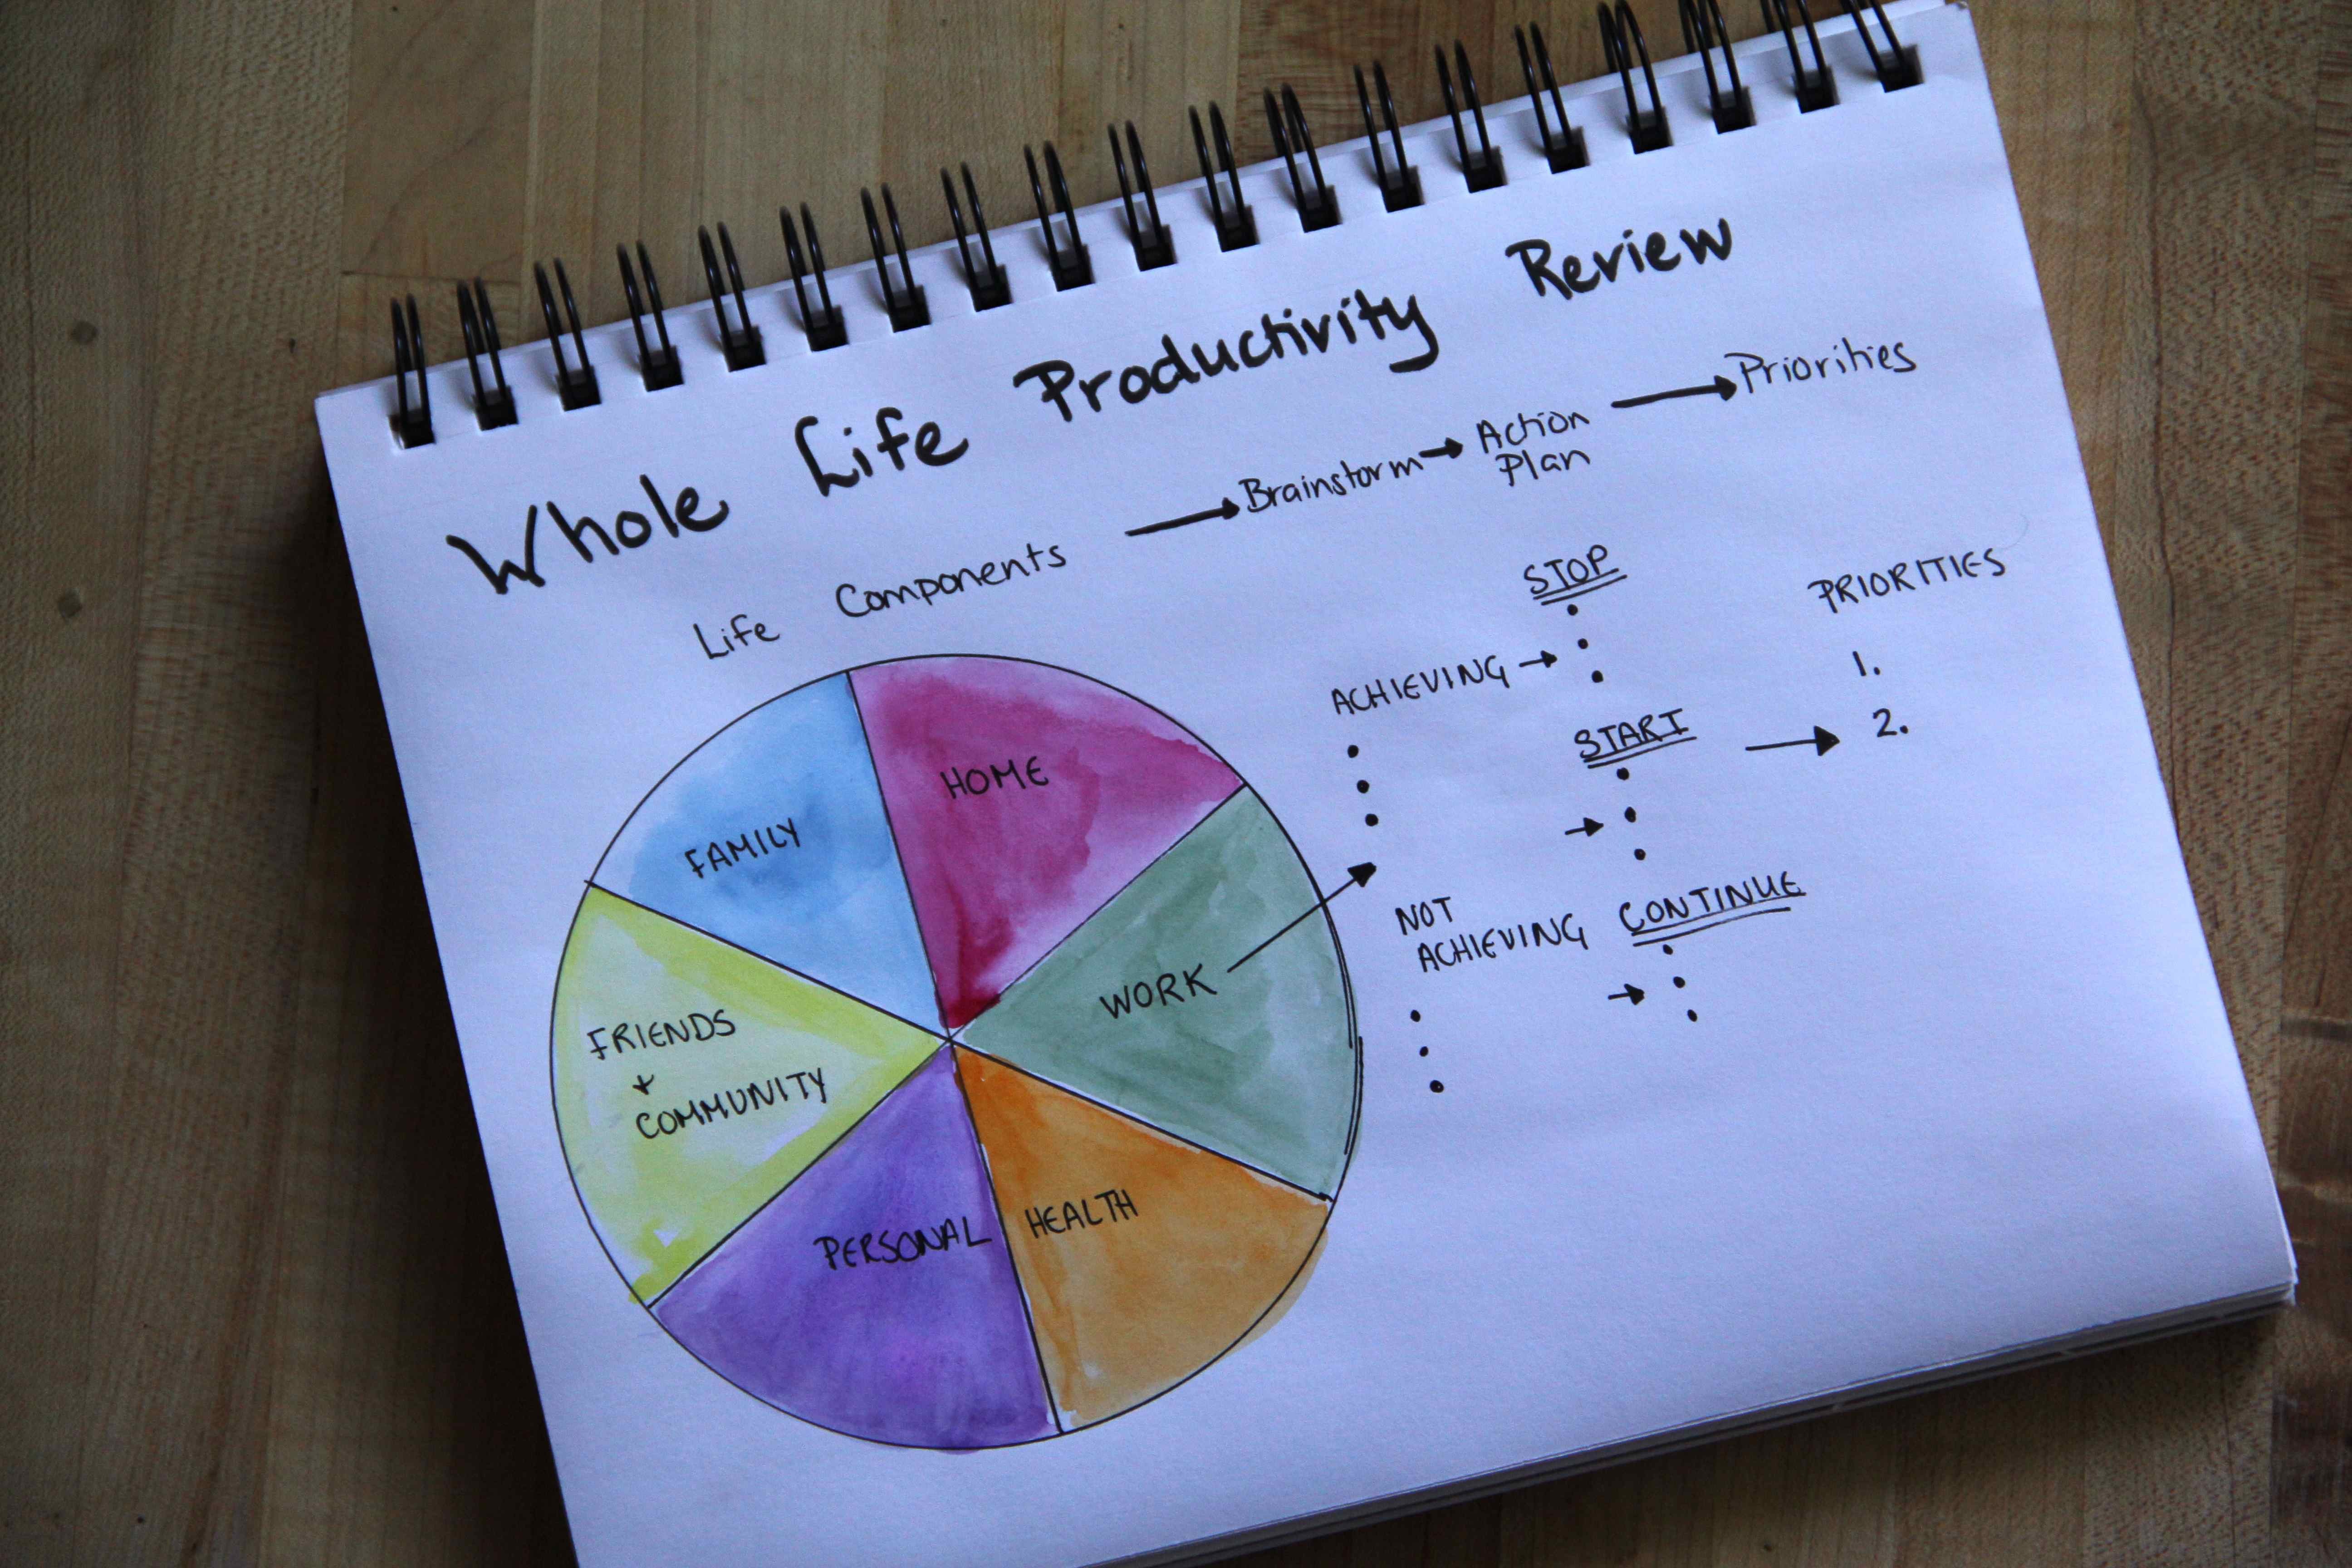 Whole_Life_Productivity